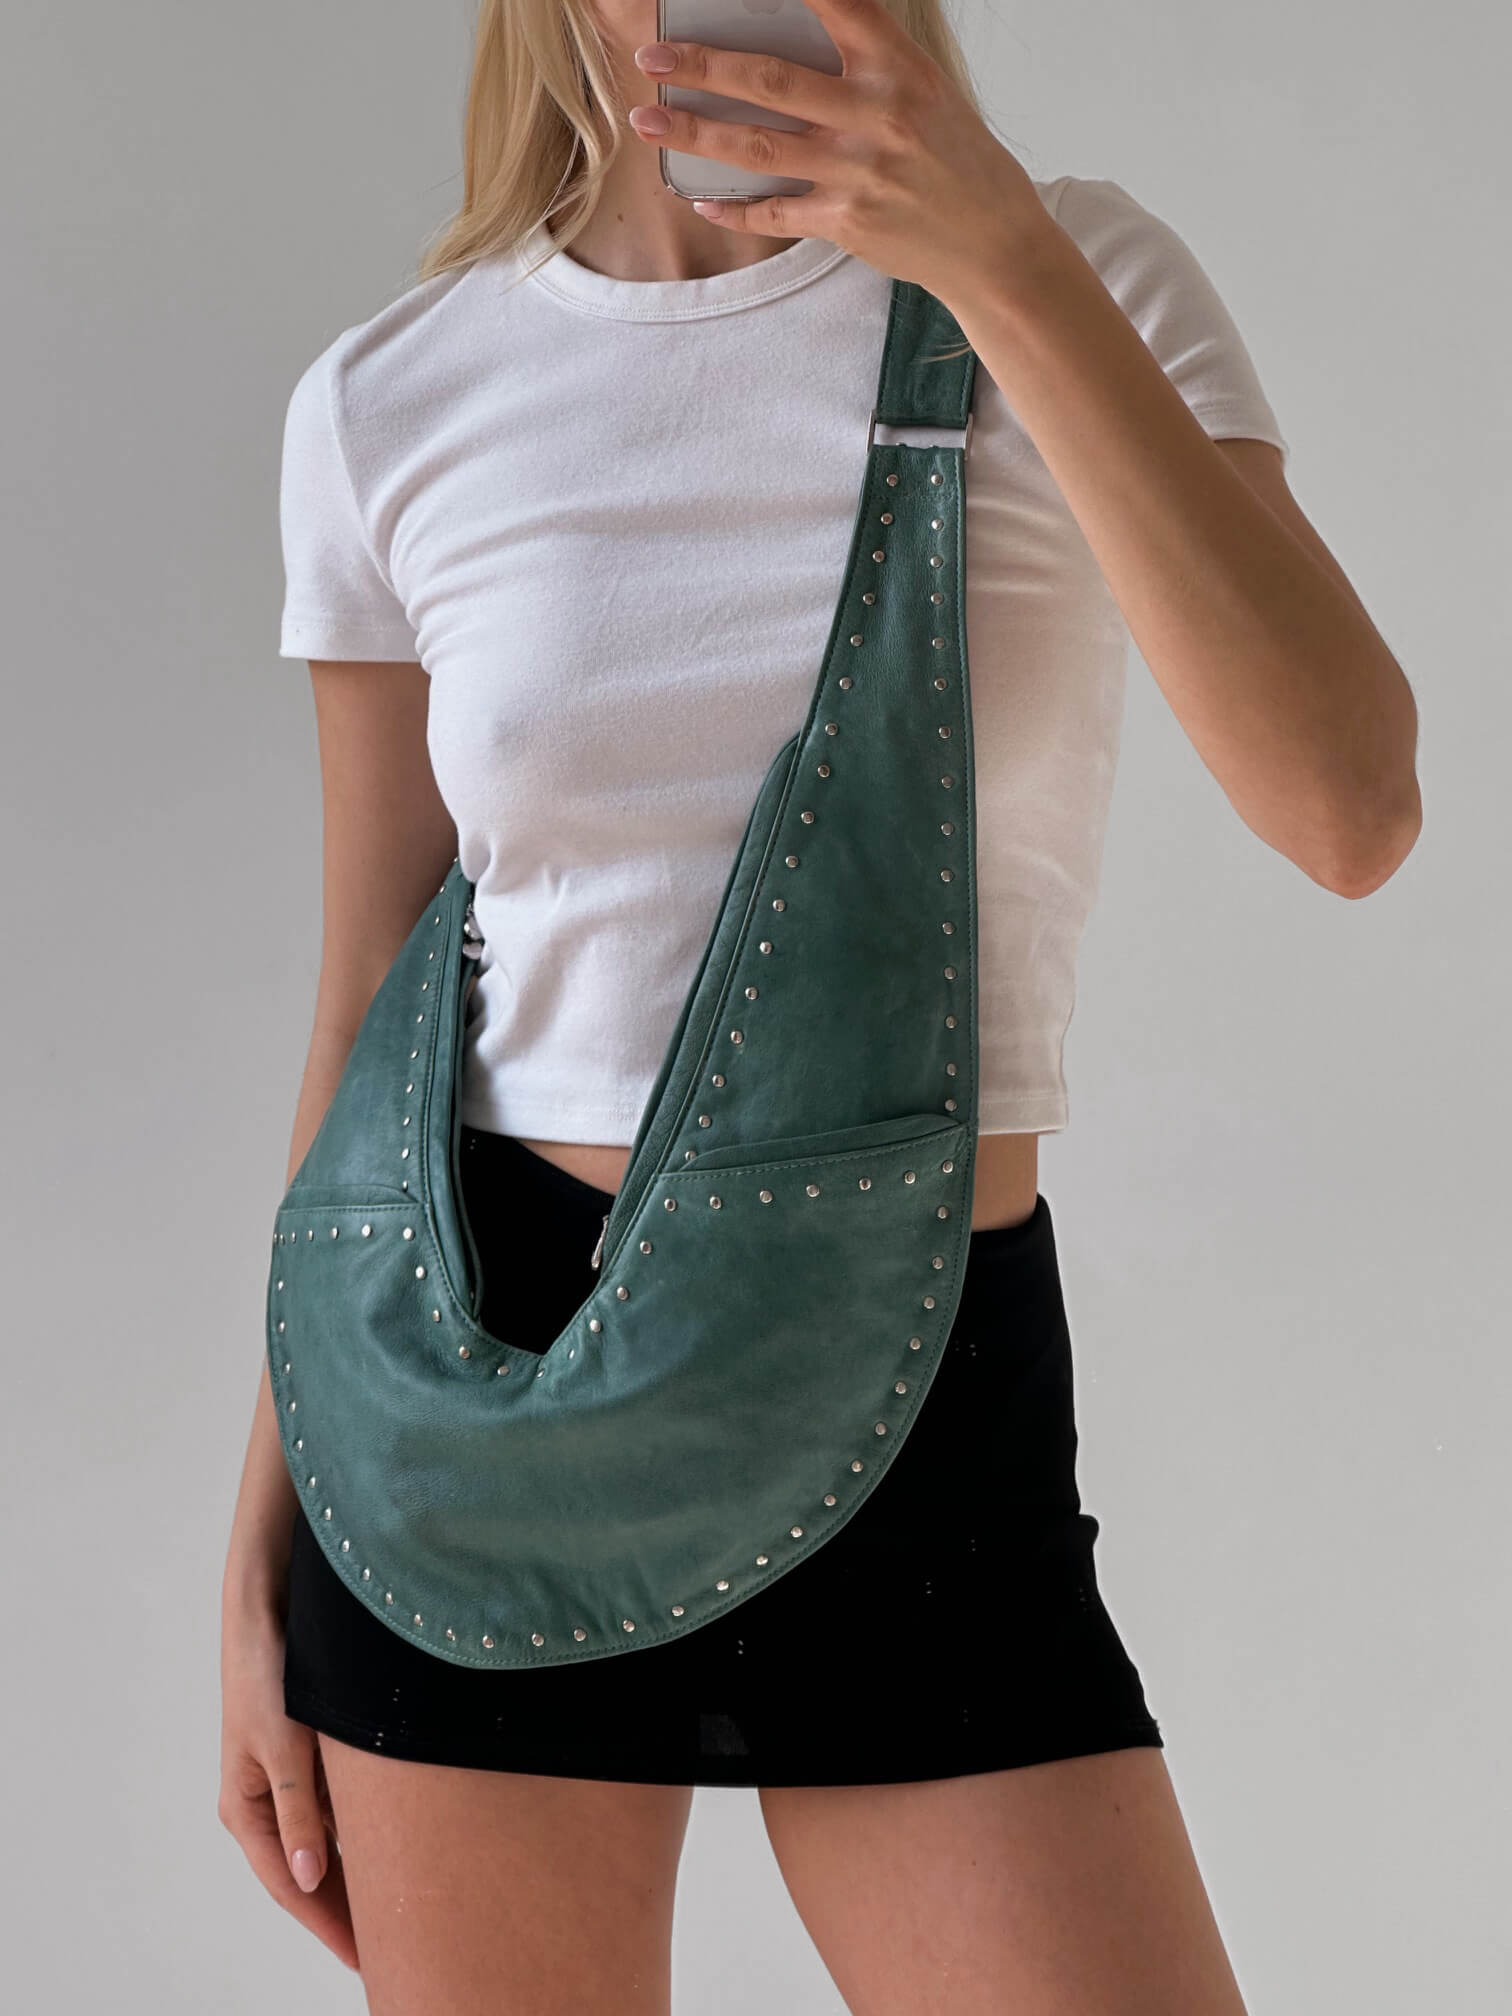 Vintage Turquoise Studded Leather Bag